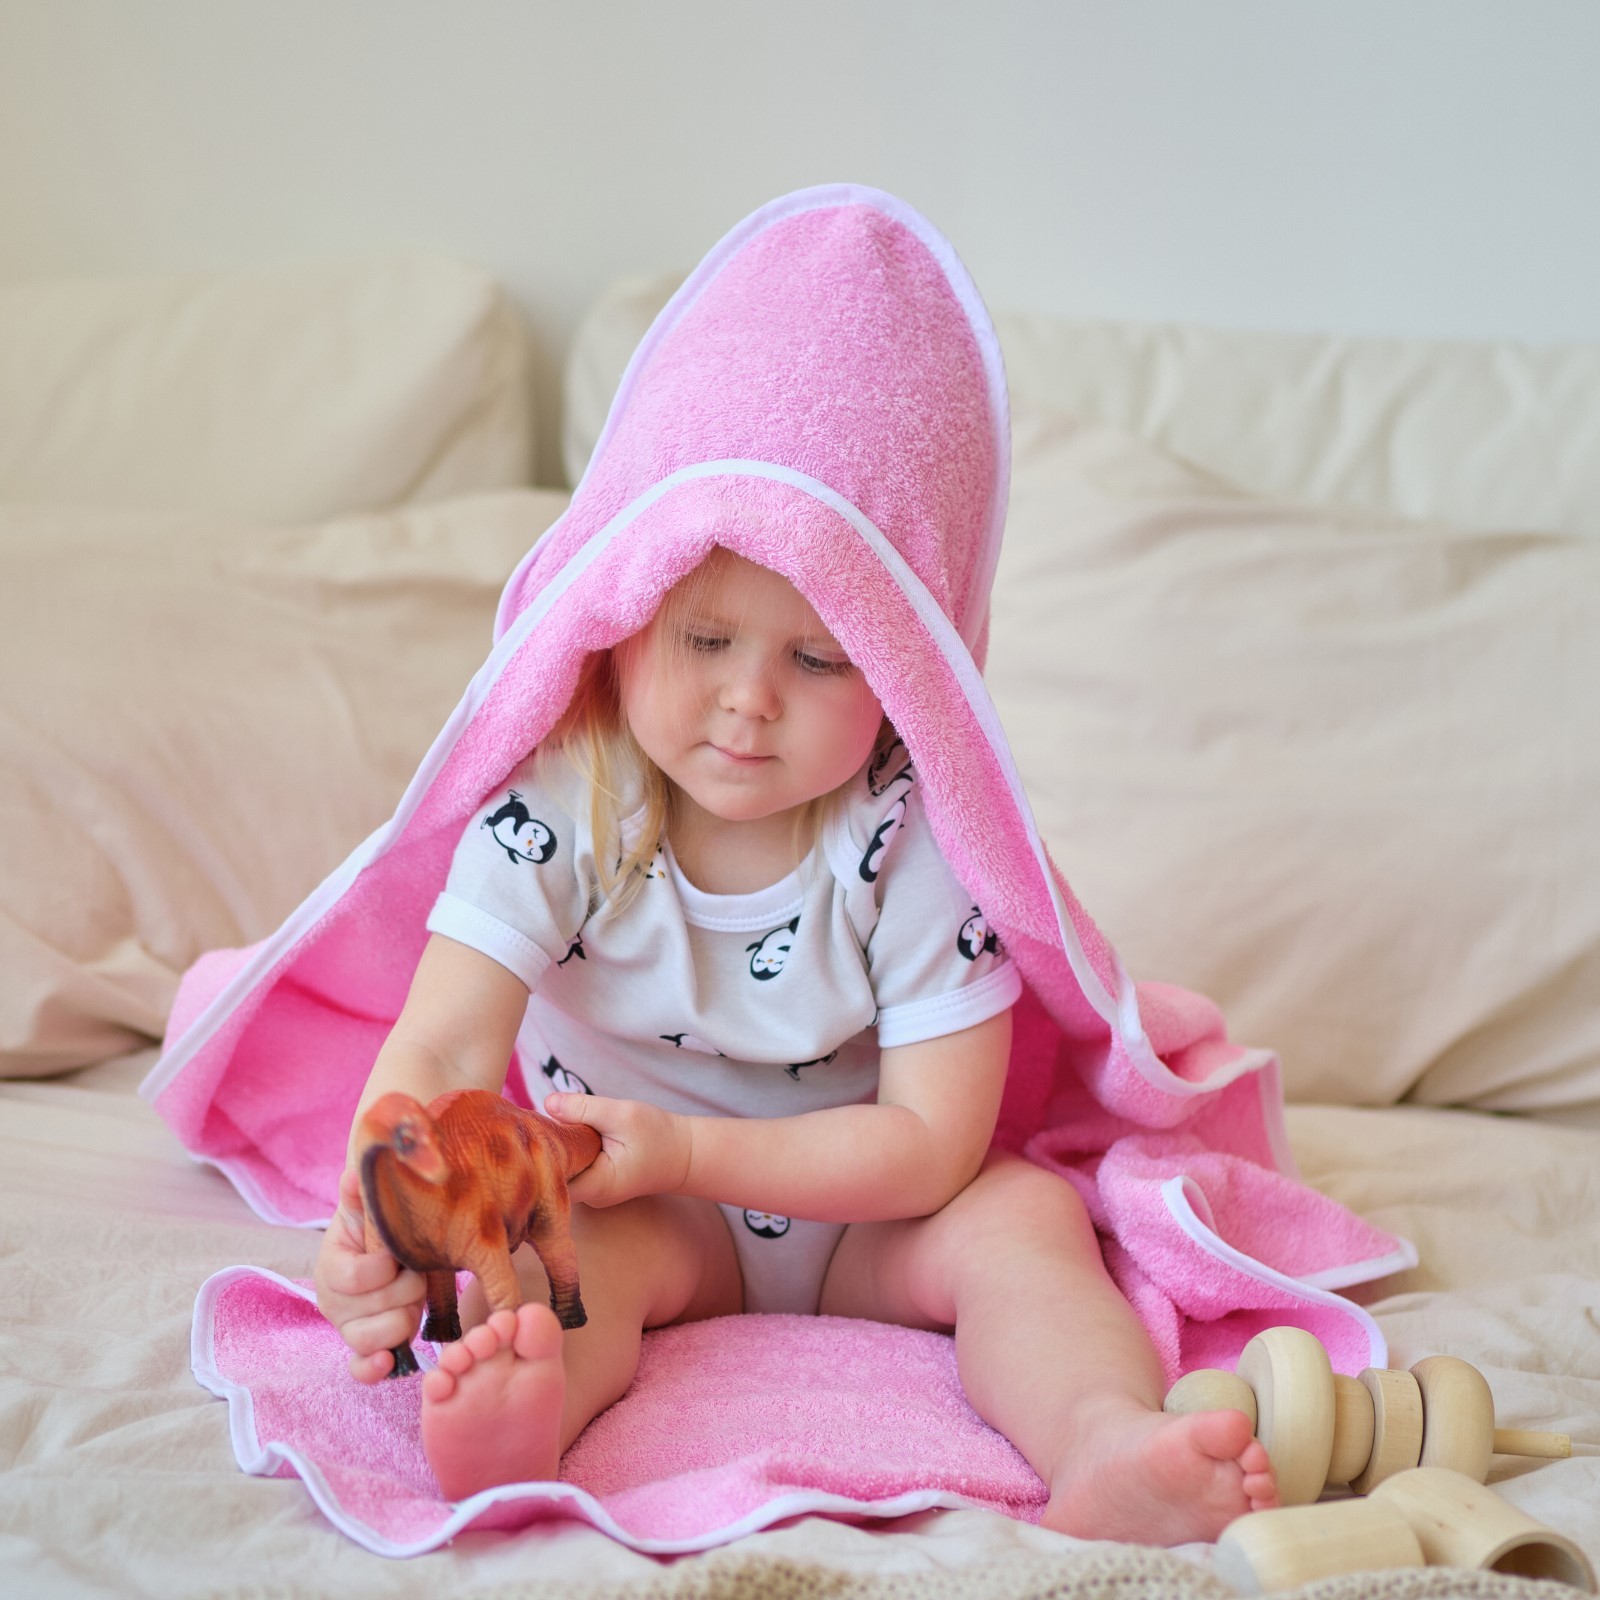 Детское полотенце Sherri цвет: розовый (85х85 см), размер 85х85 см ros910598 Детское полотенце Sherri цвет: розовый (85х85 см) - фото 1